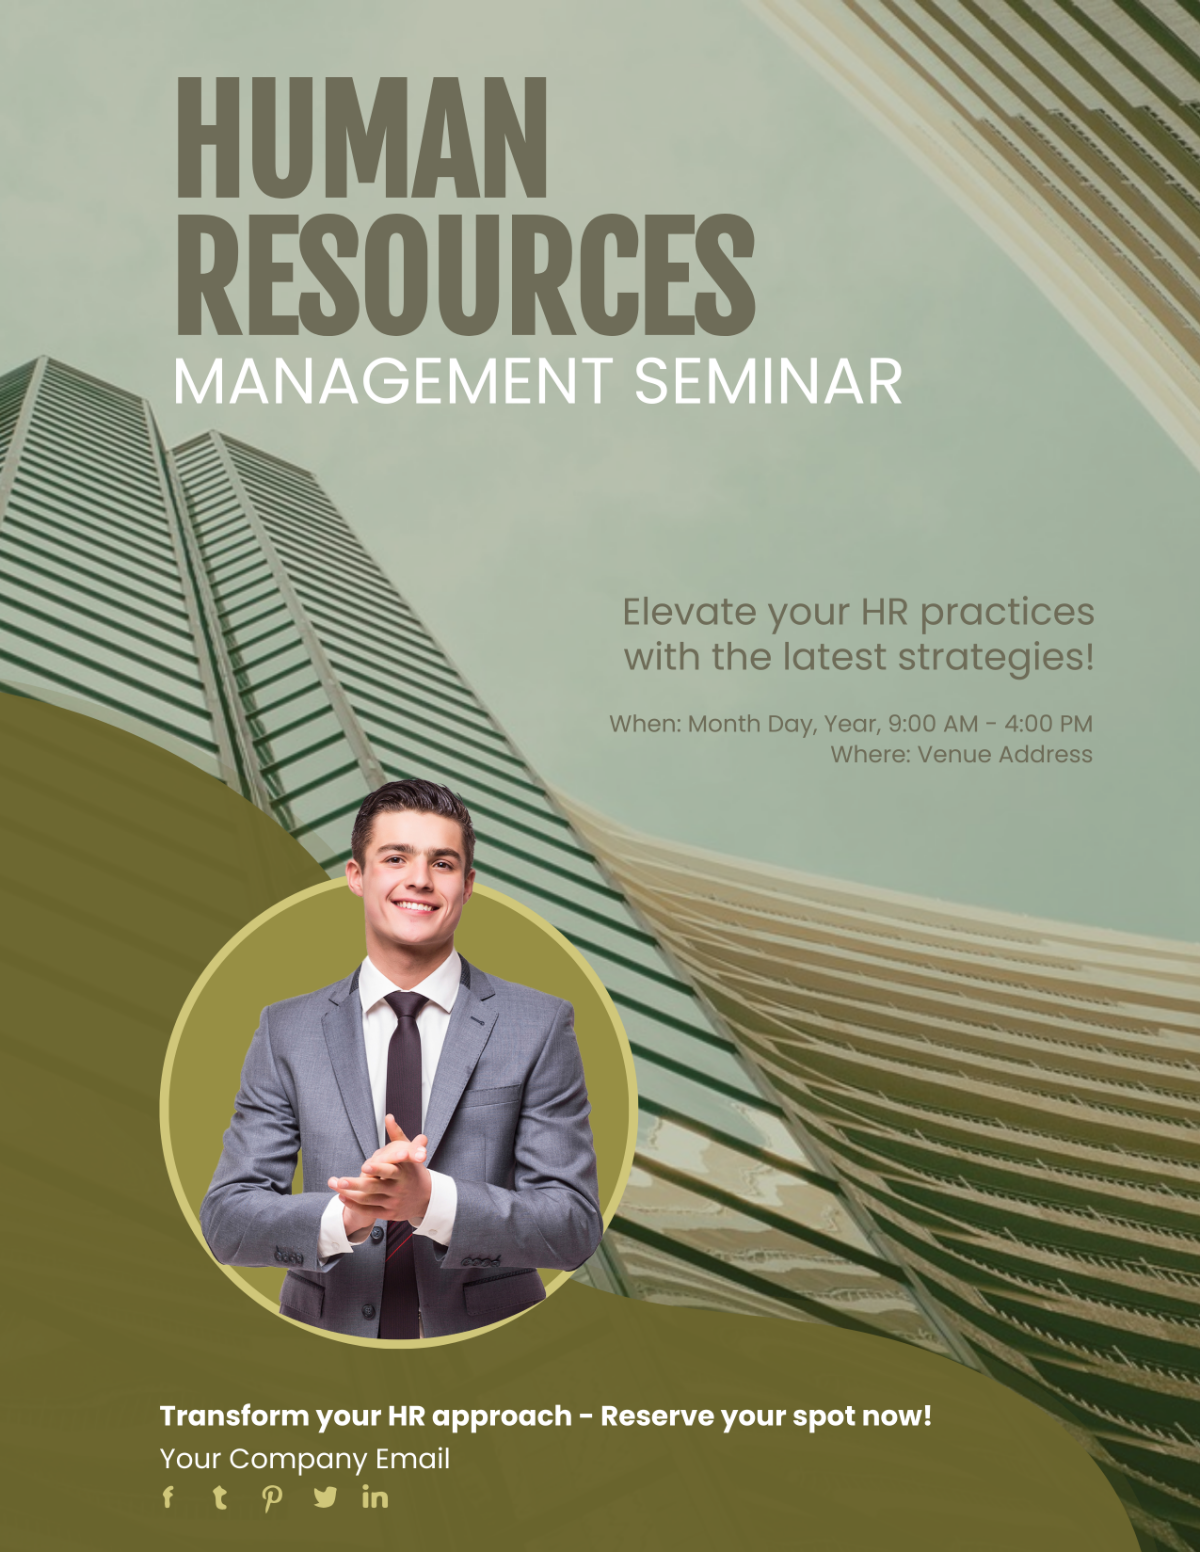 Human Resources Management Seminar Flyer Template